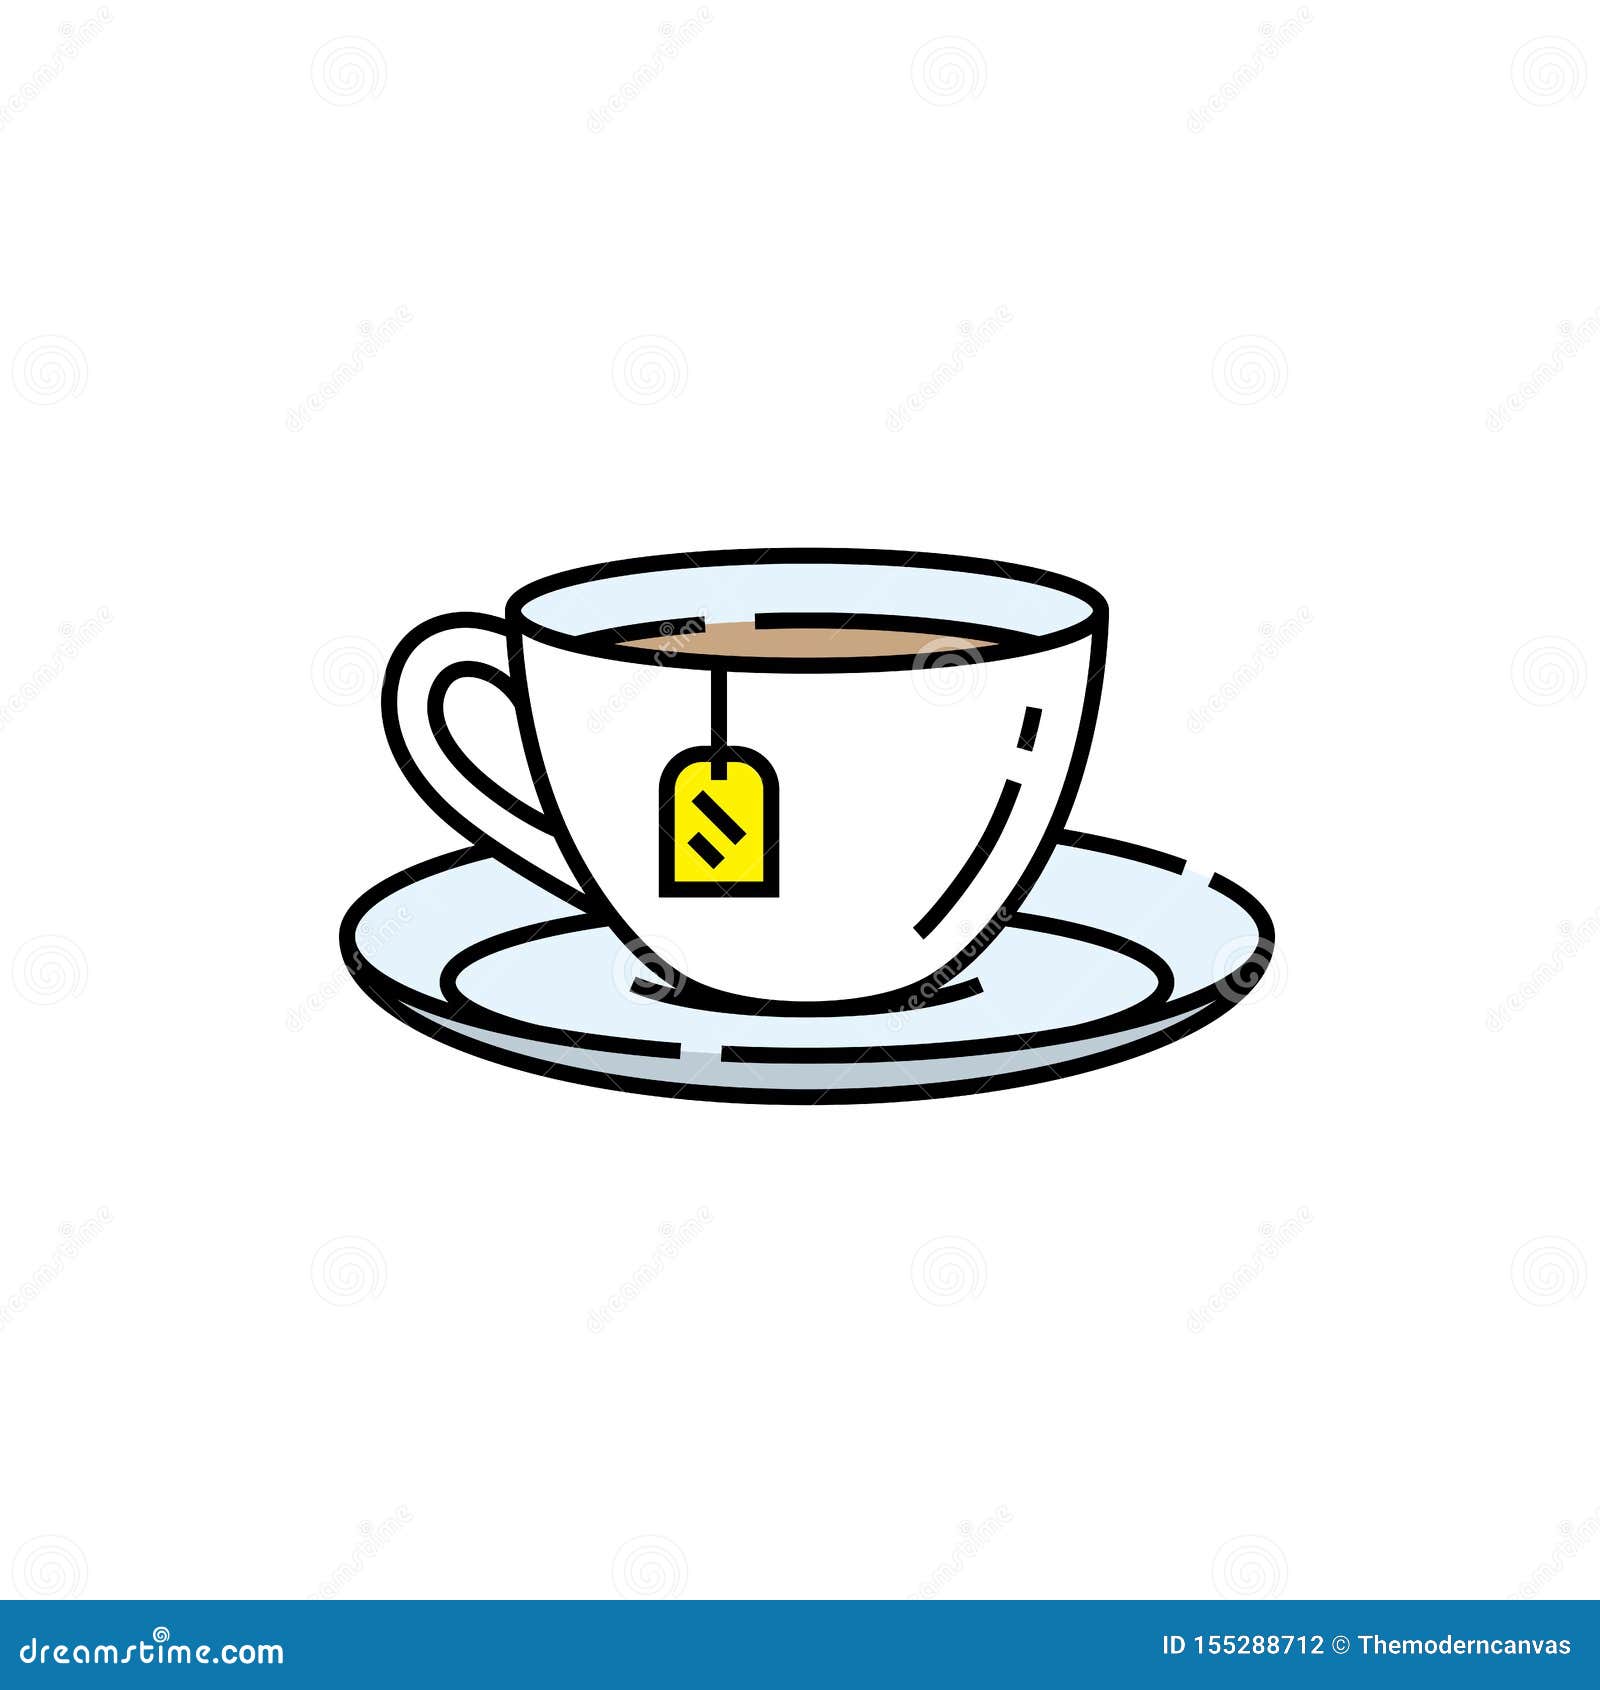 https://thumbs.dreamstime.com/z/teacup-line-icon-teacup-line-icon-porcelain-tea-cup-saucer-symbol-yellow-label-sign-vector-illustration-155288712.jpg